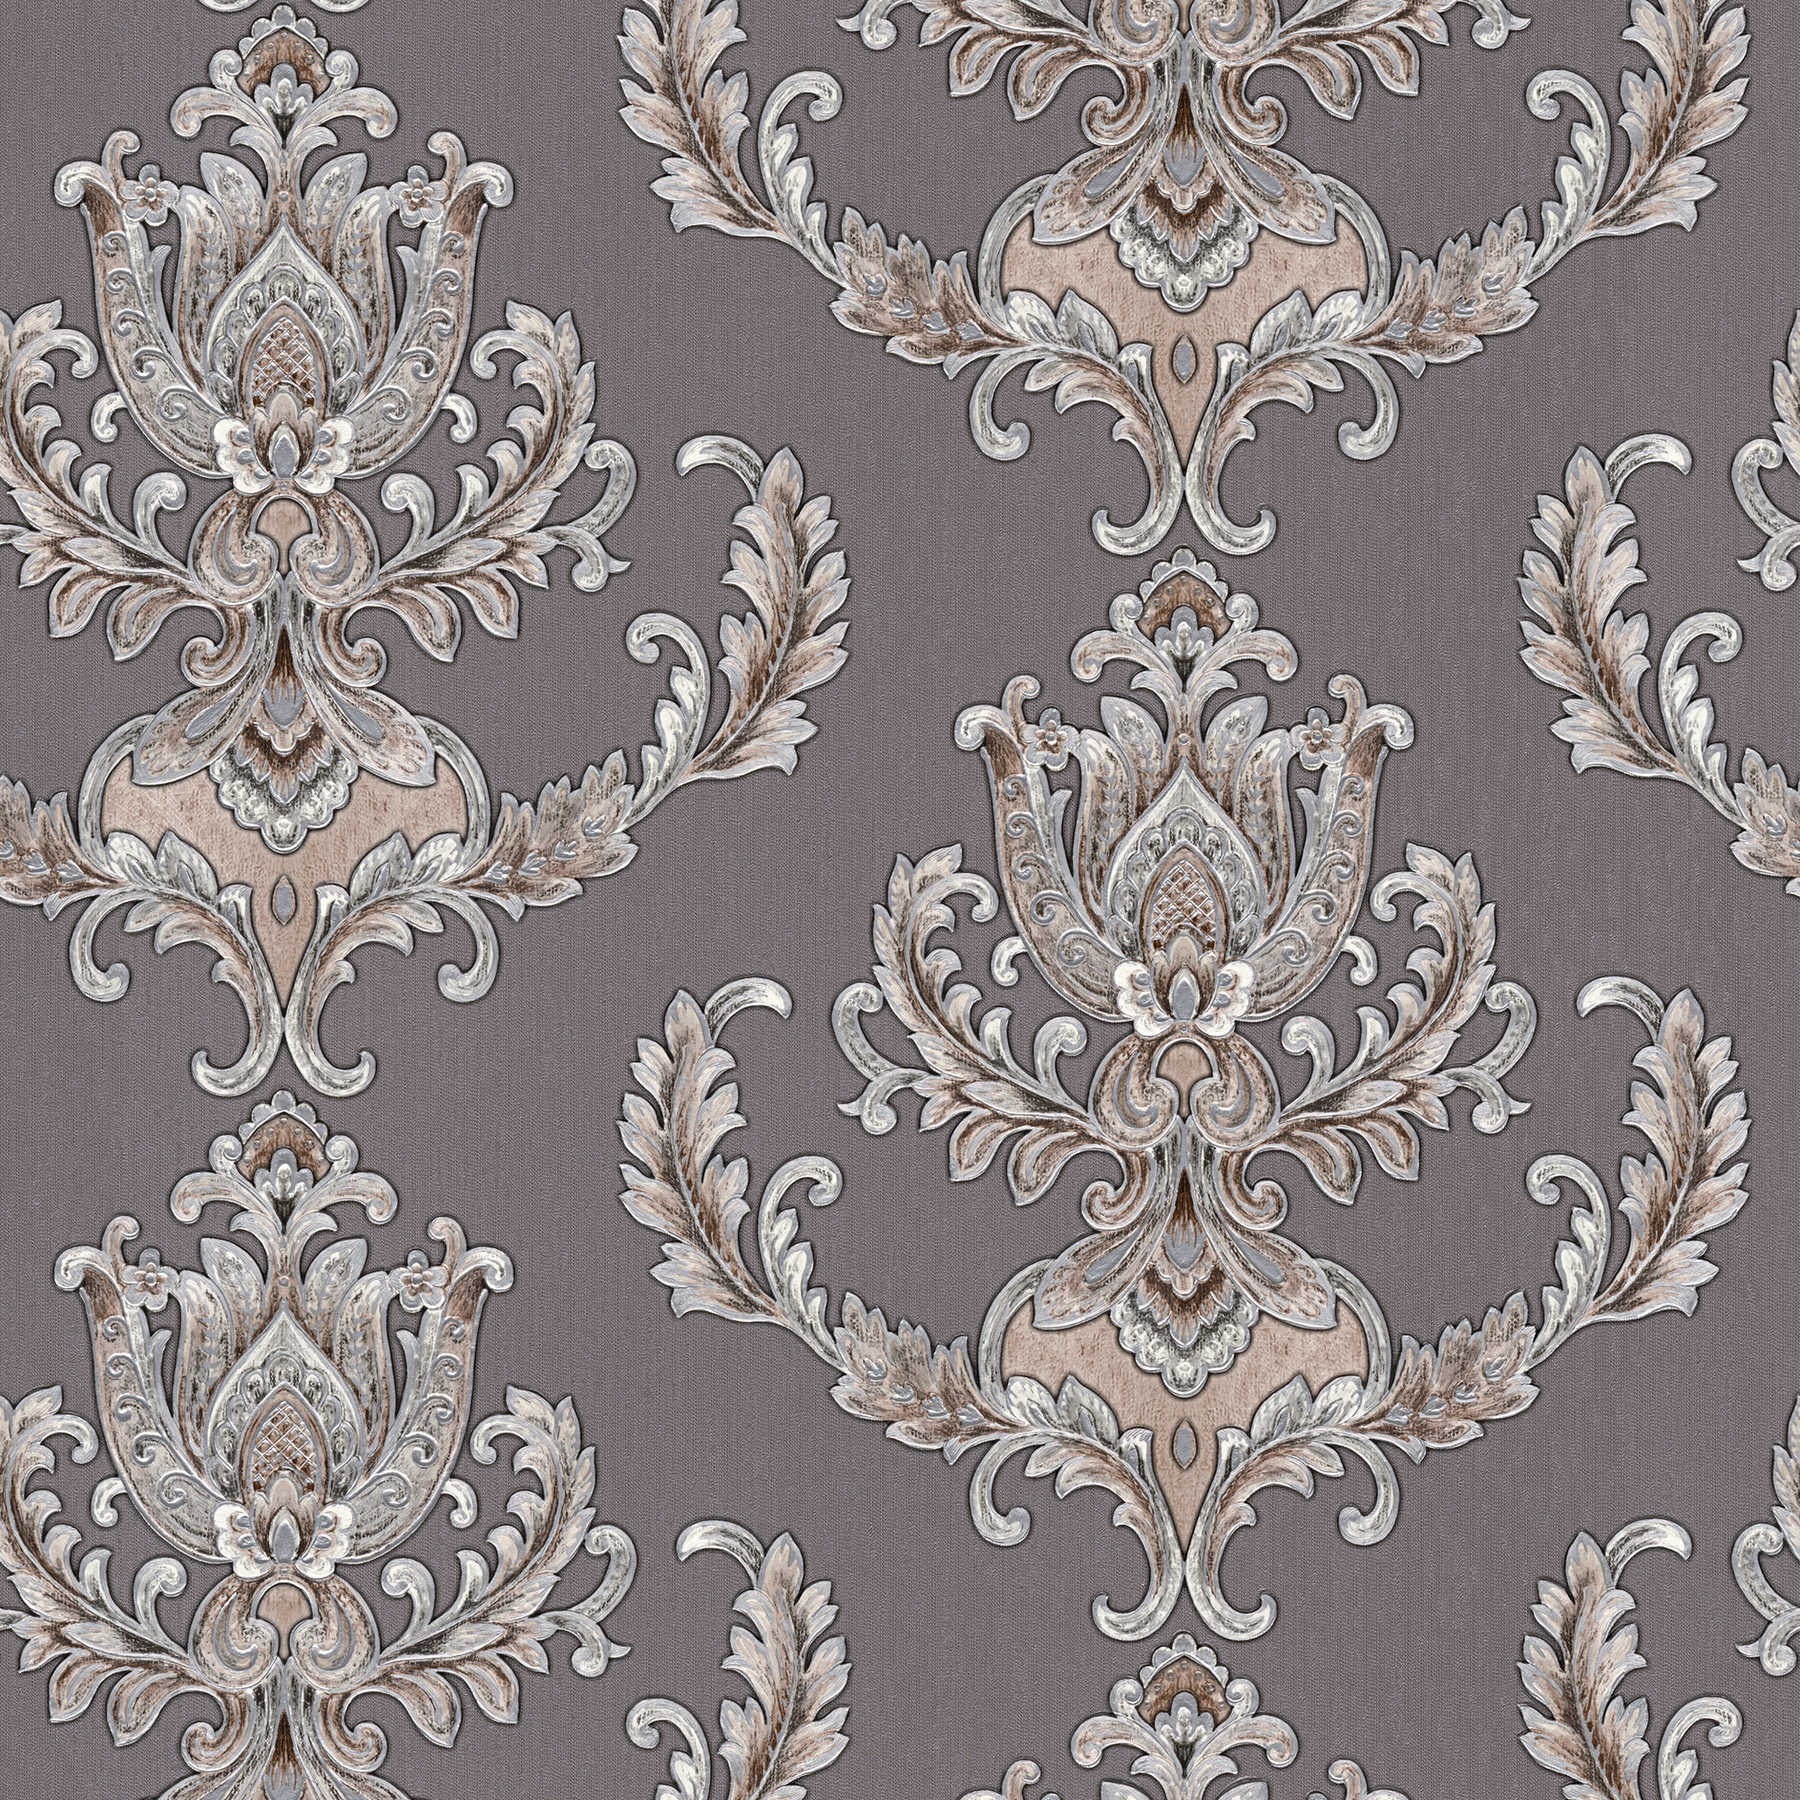 Metallic wallpaper with opulent ornament design - grey
